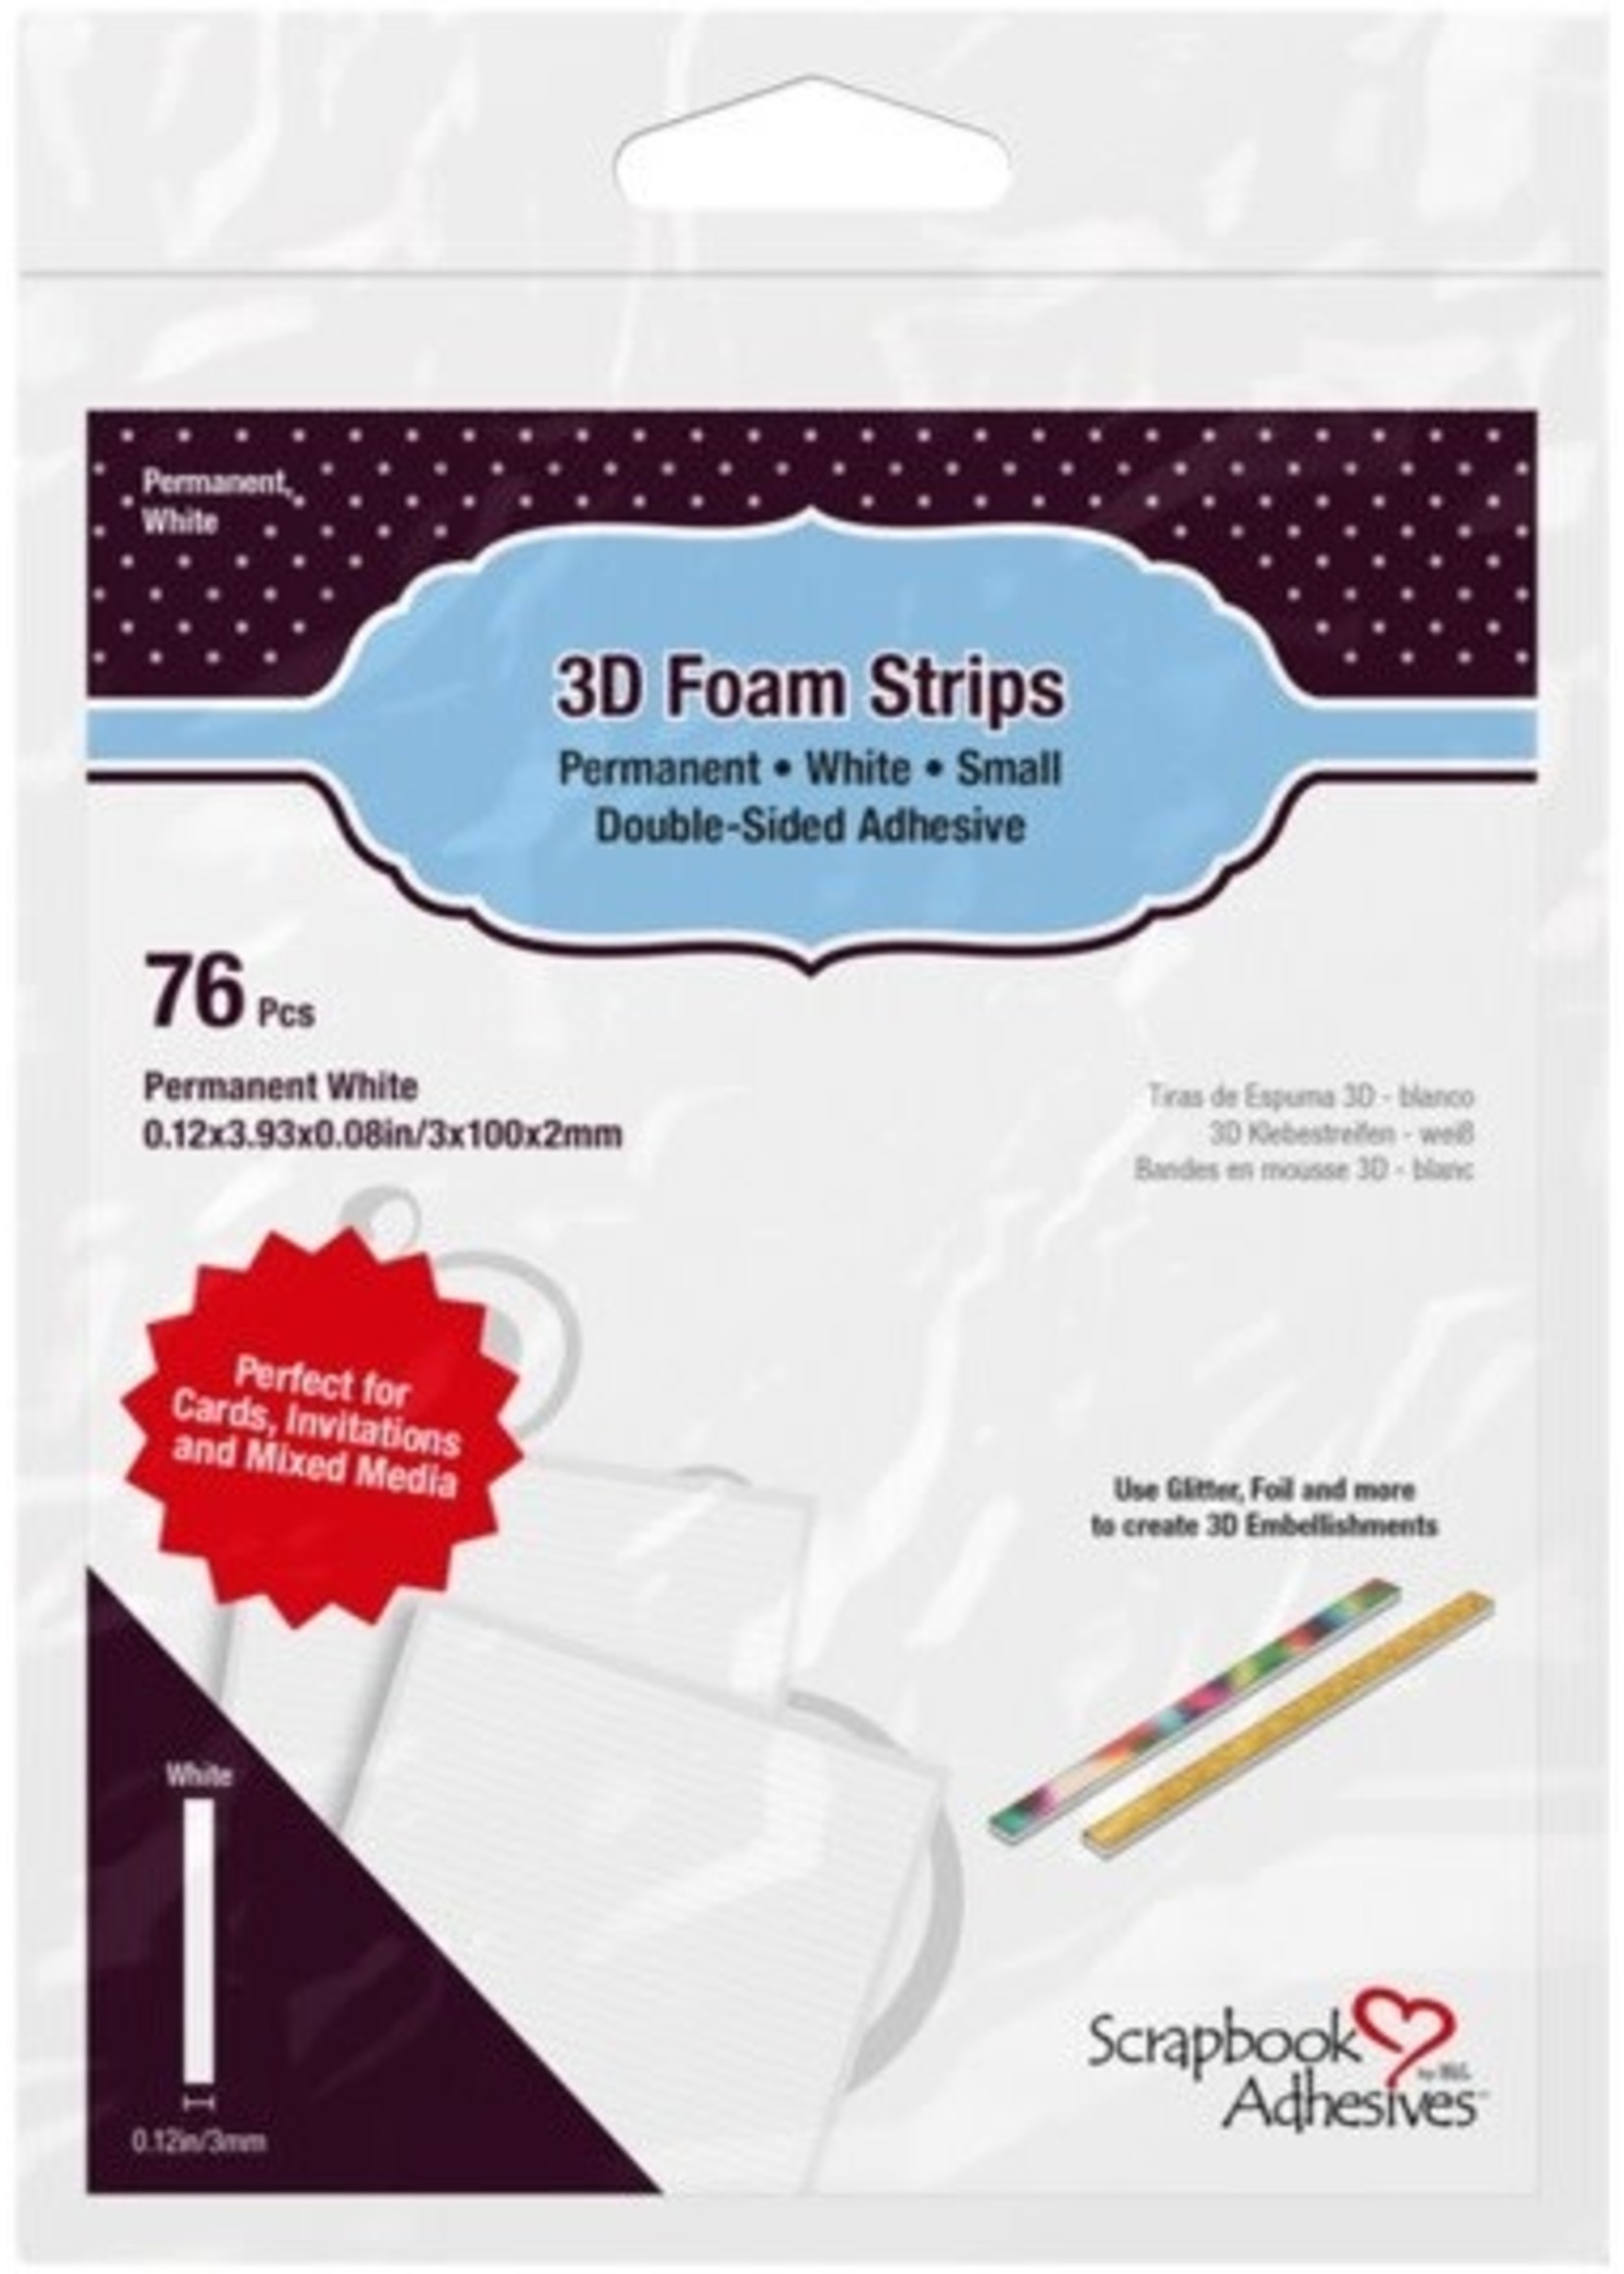 Scrapbook Adhesive SA 3D Foam Strips White, Small